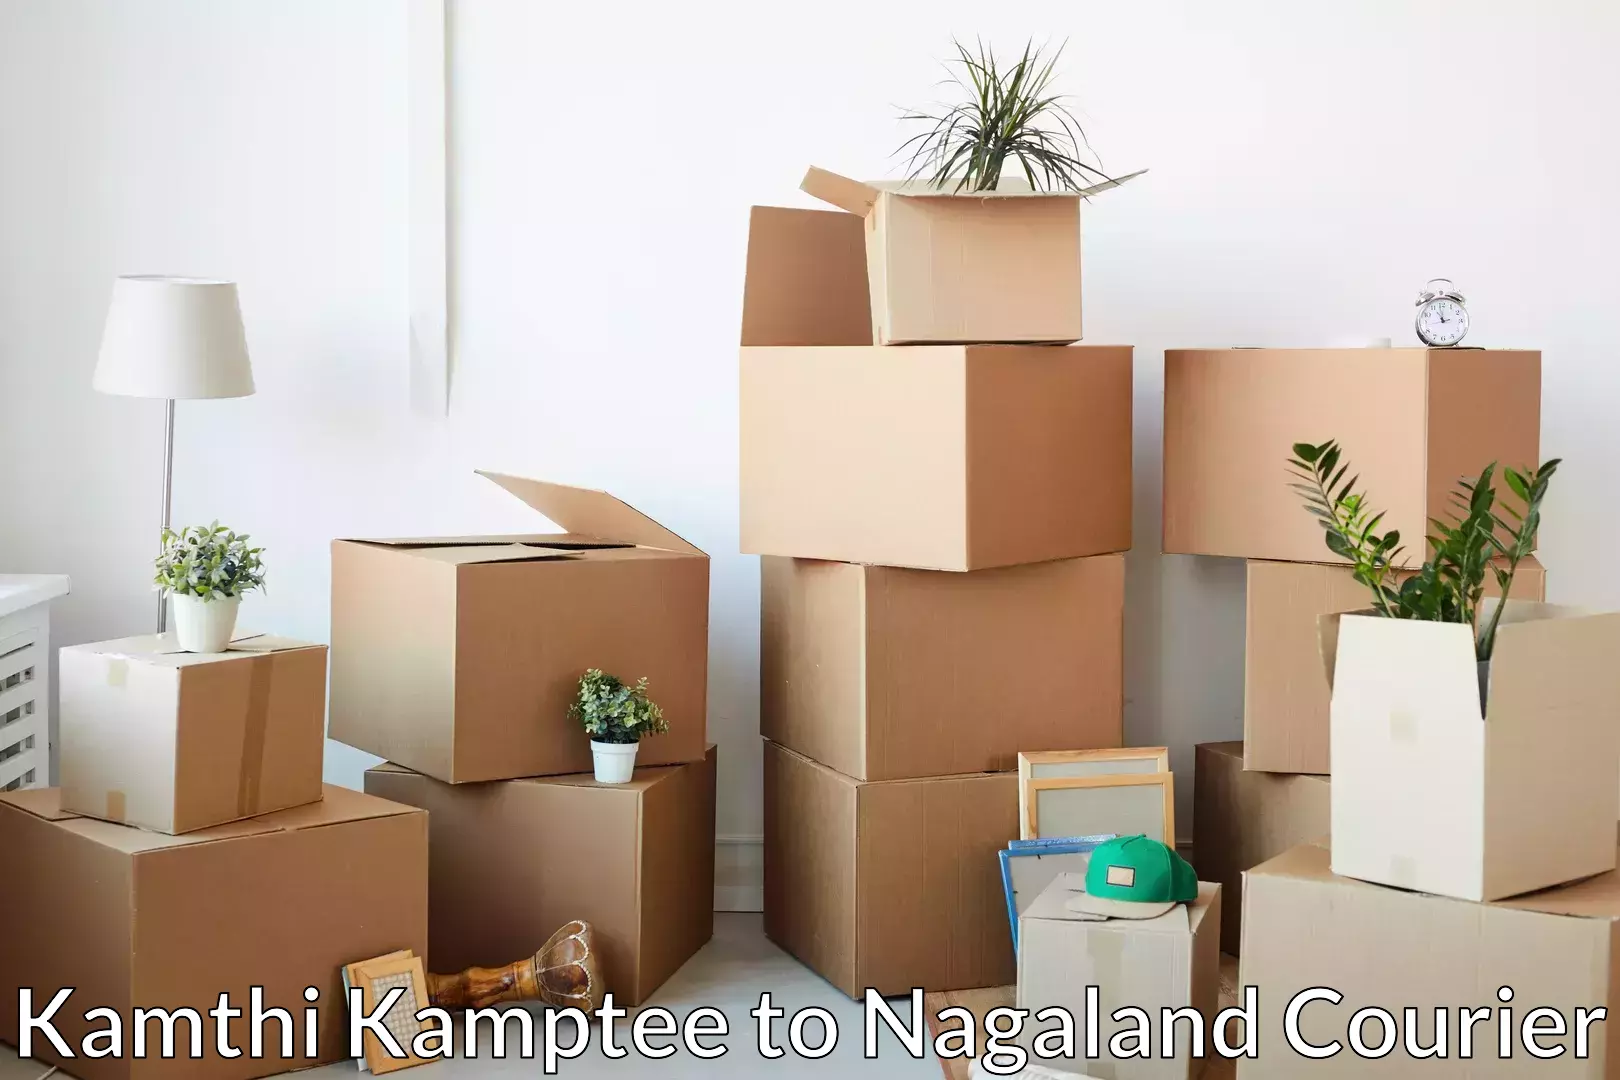 Professional moving company Kamthi Kamptee to Nagaland